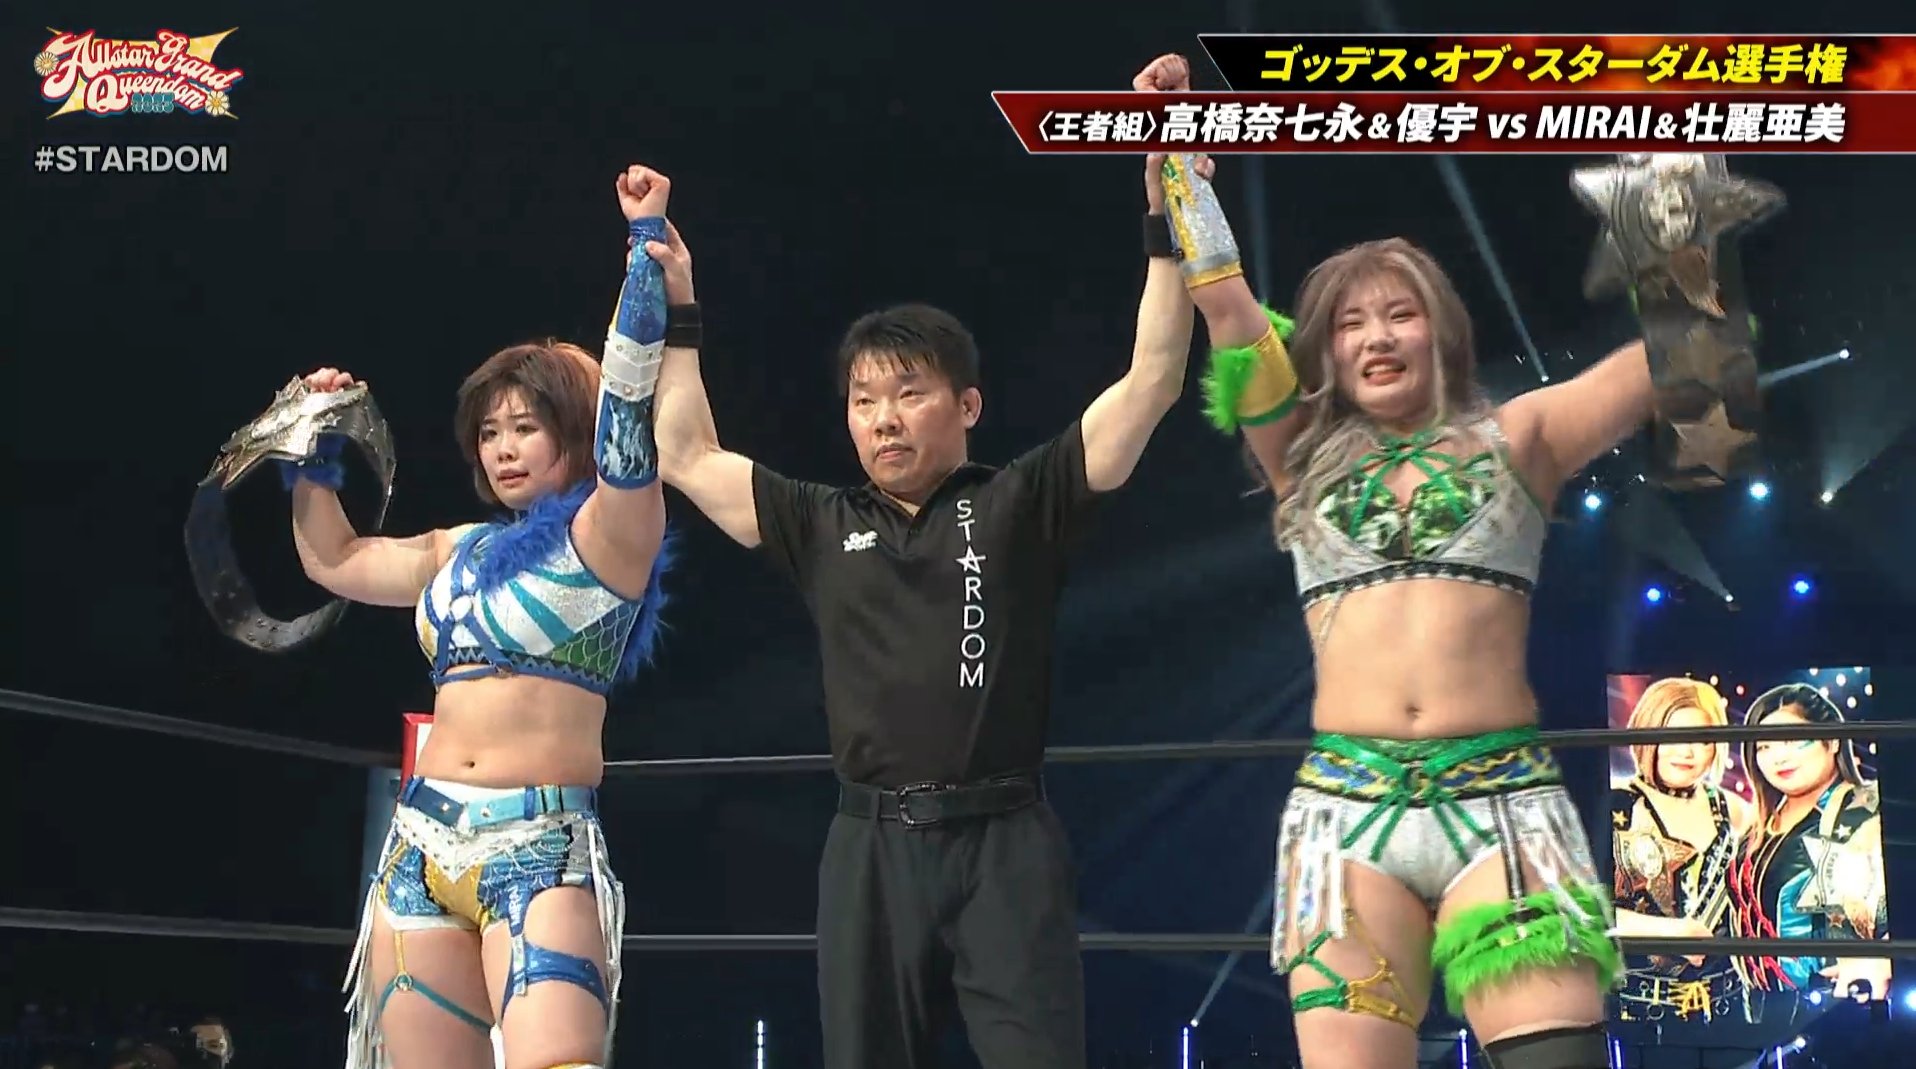 Ami Sourei and MIRAI win the Goddess of STARDOM Championship